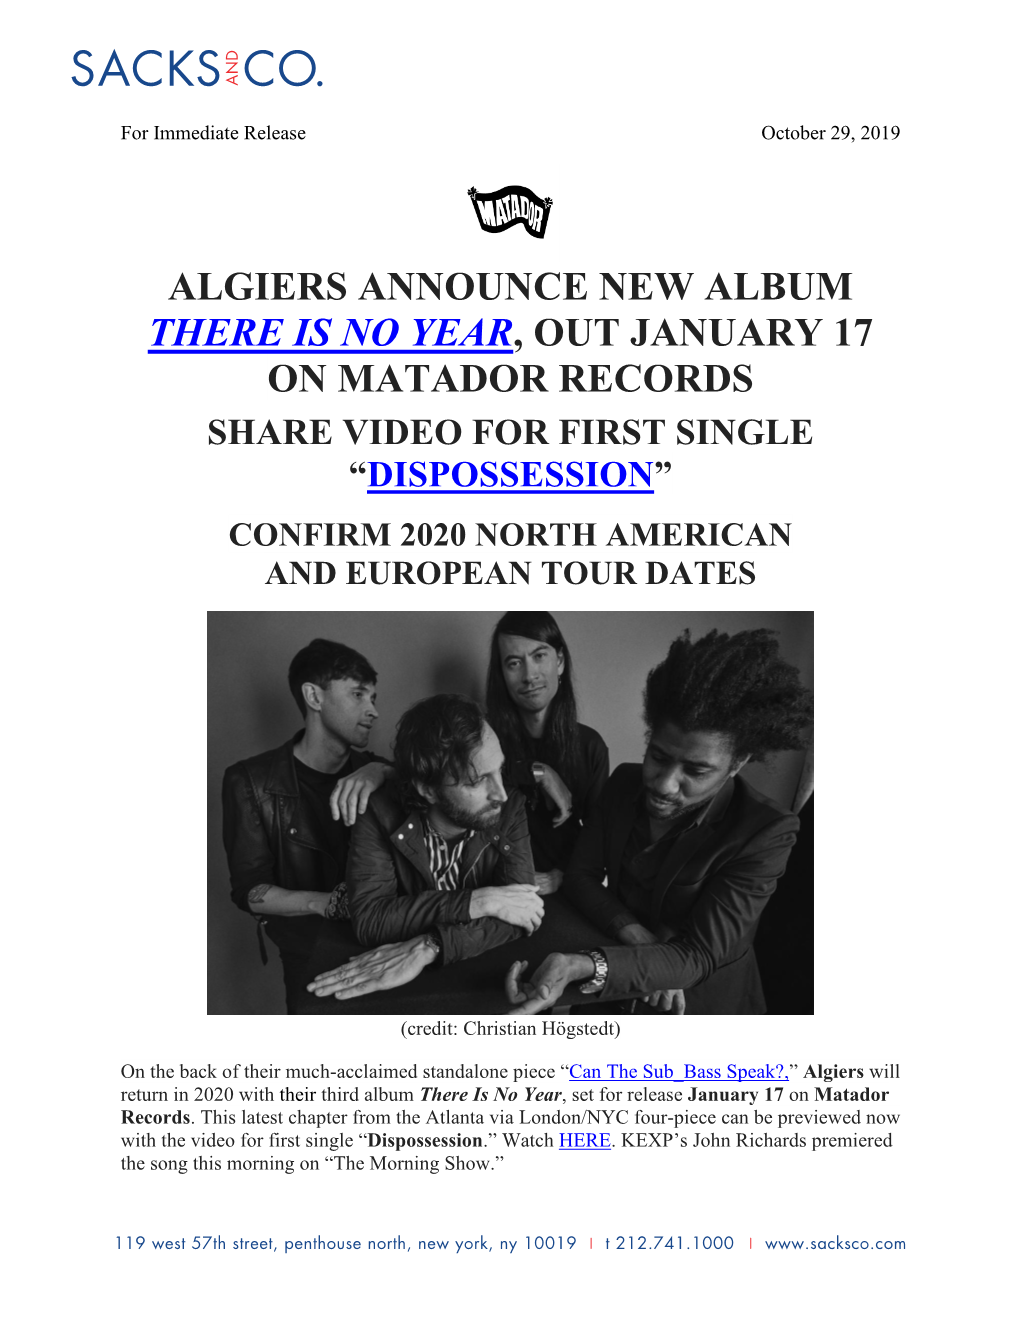 Algiers Press Release 2019